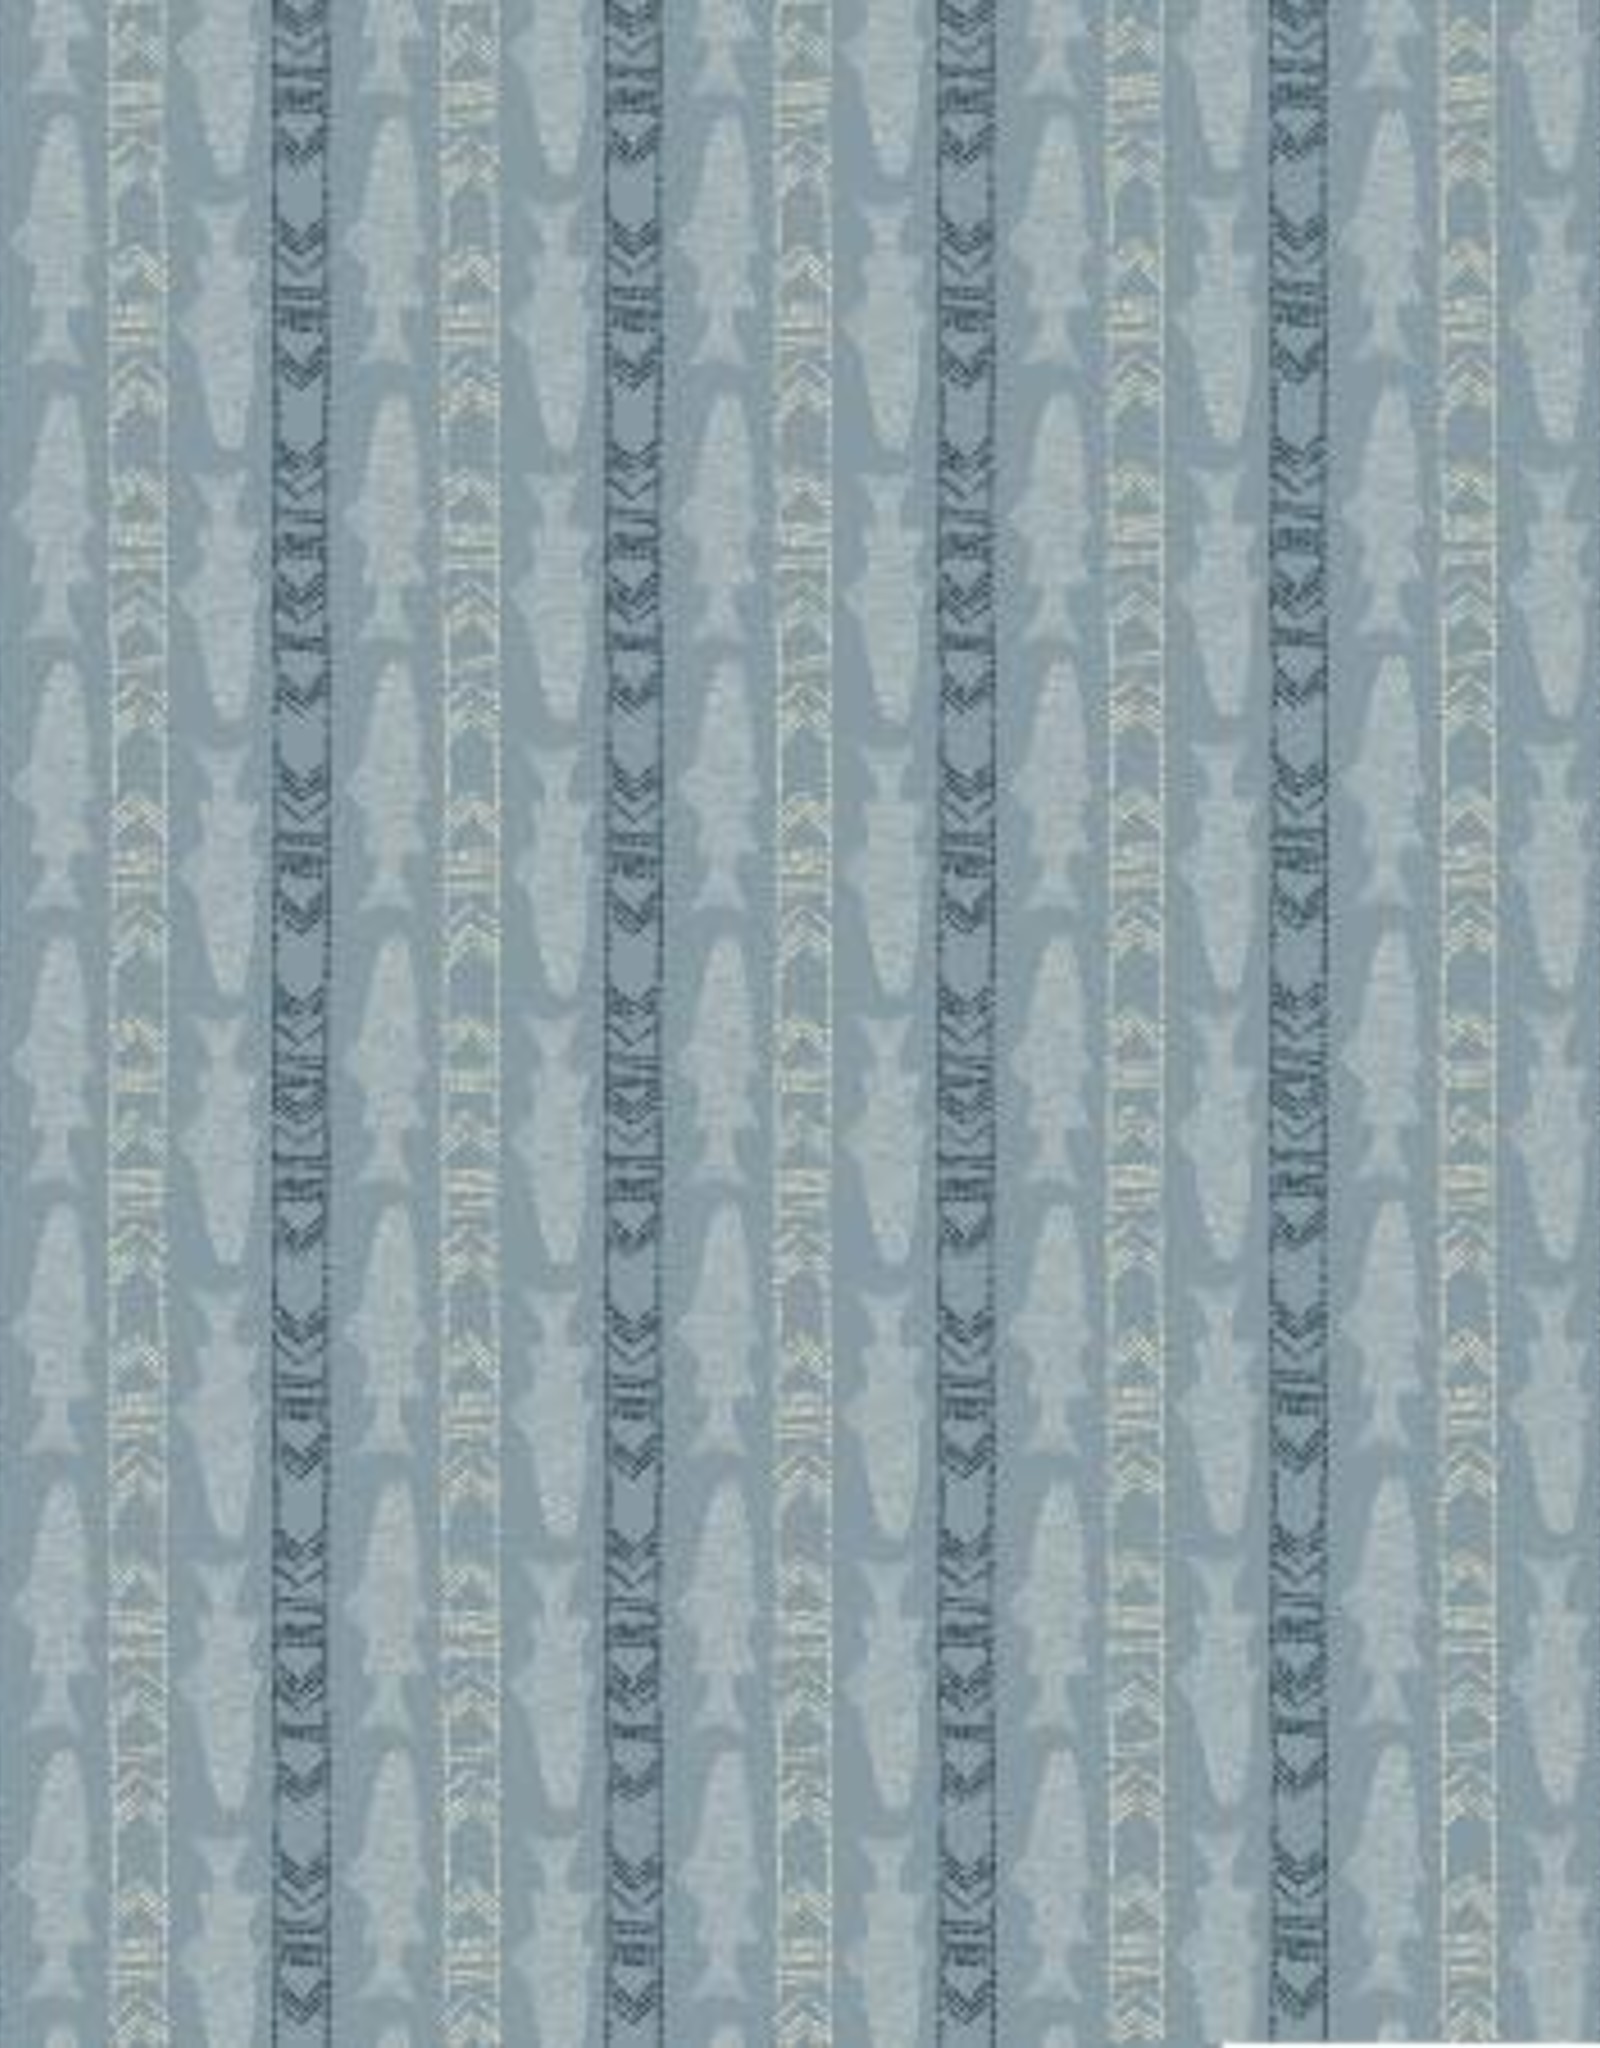 P&B Textiles Blue Fish Stripe LESC4520-B (1/2m)